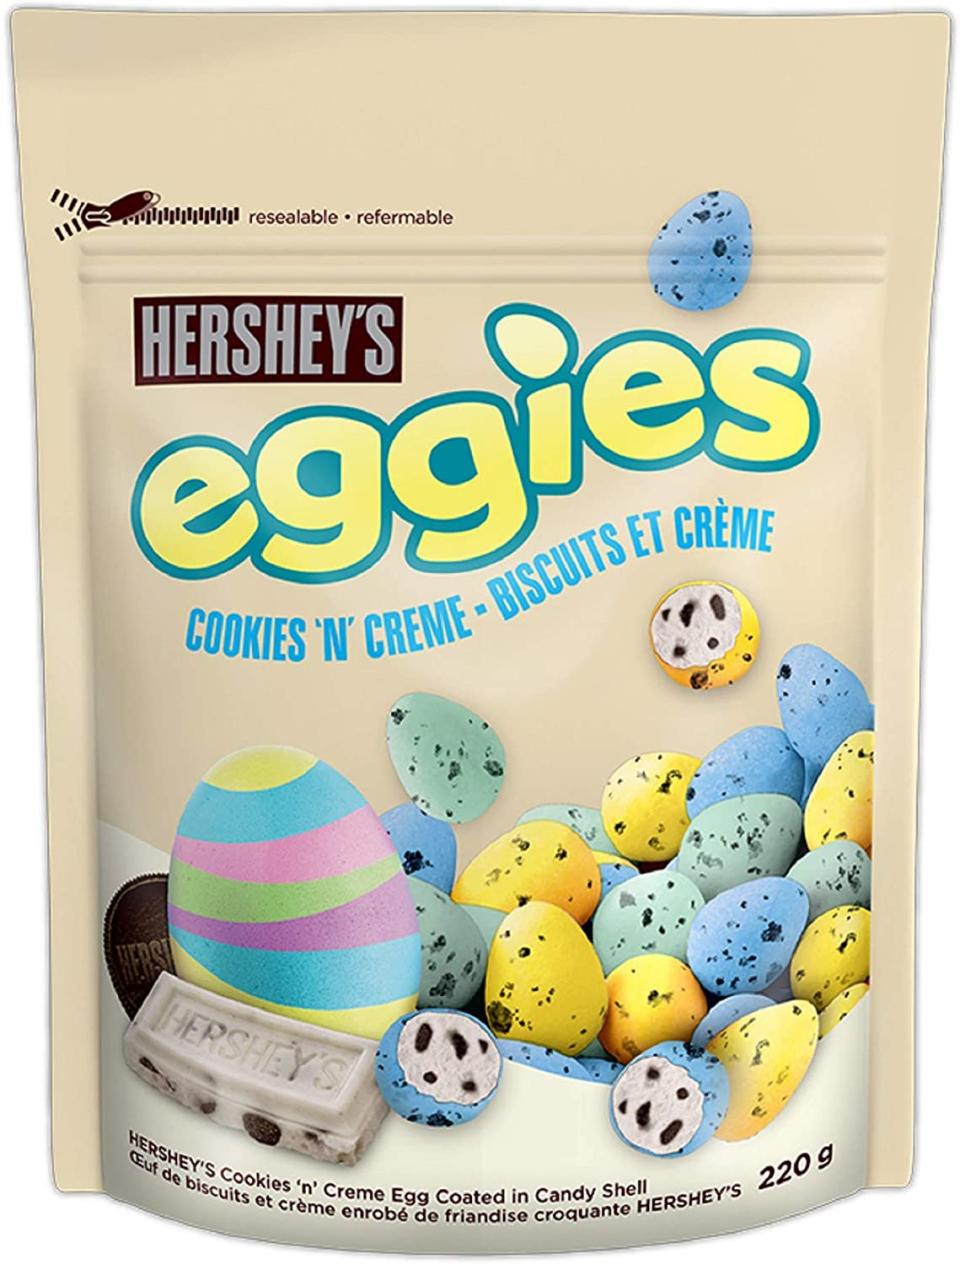 HERSHEY'S EGGIES Easter Chocolate Candy, Cookies 'N' Crème. Image via Amazon.